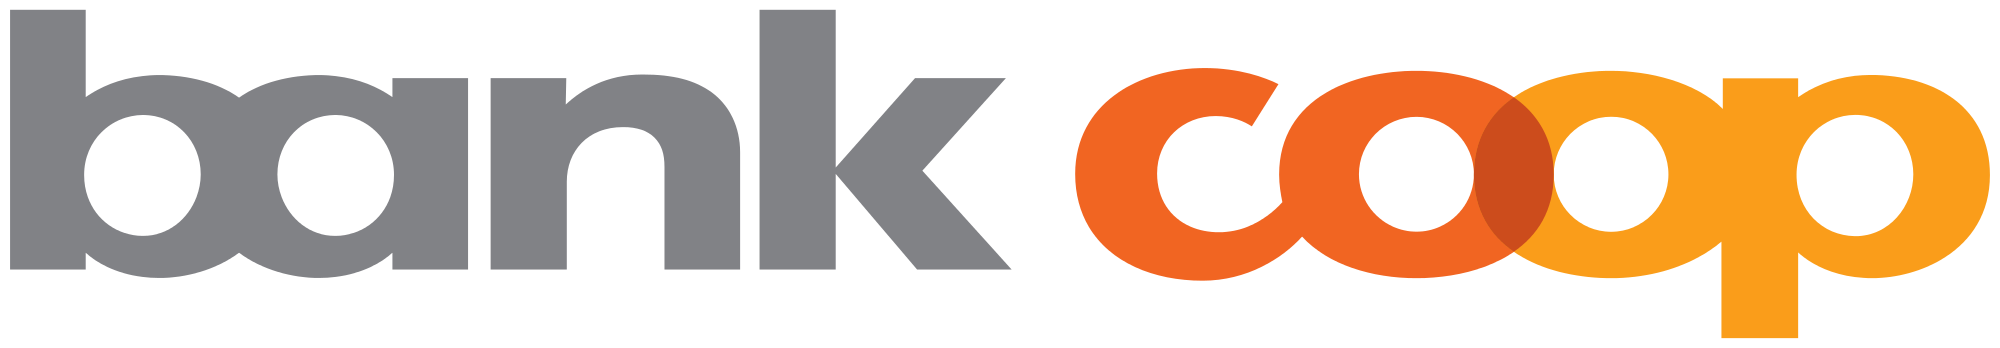 BANK COOP Brand Logo